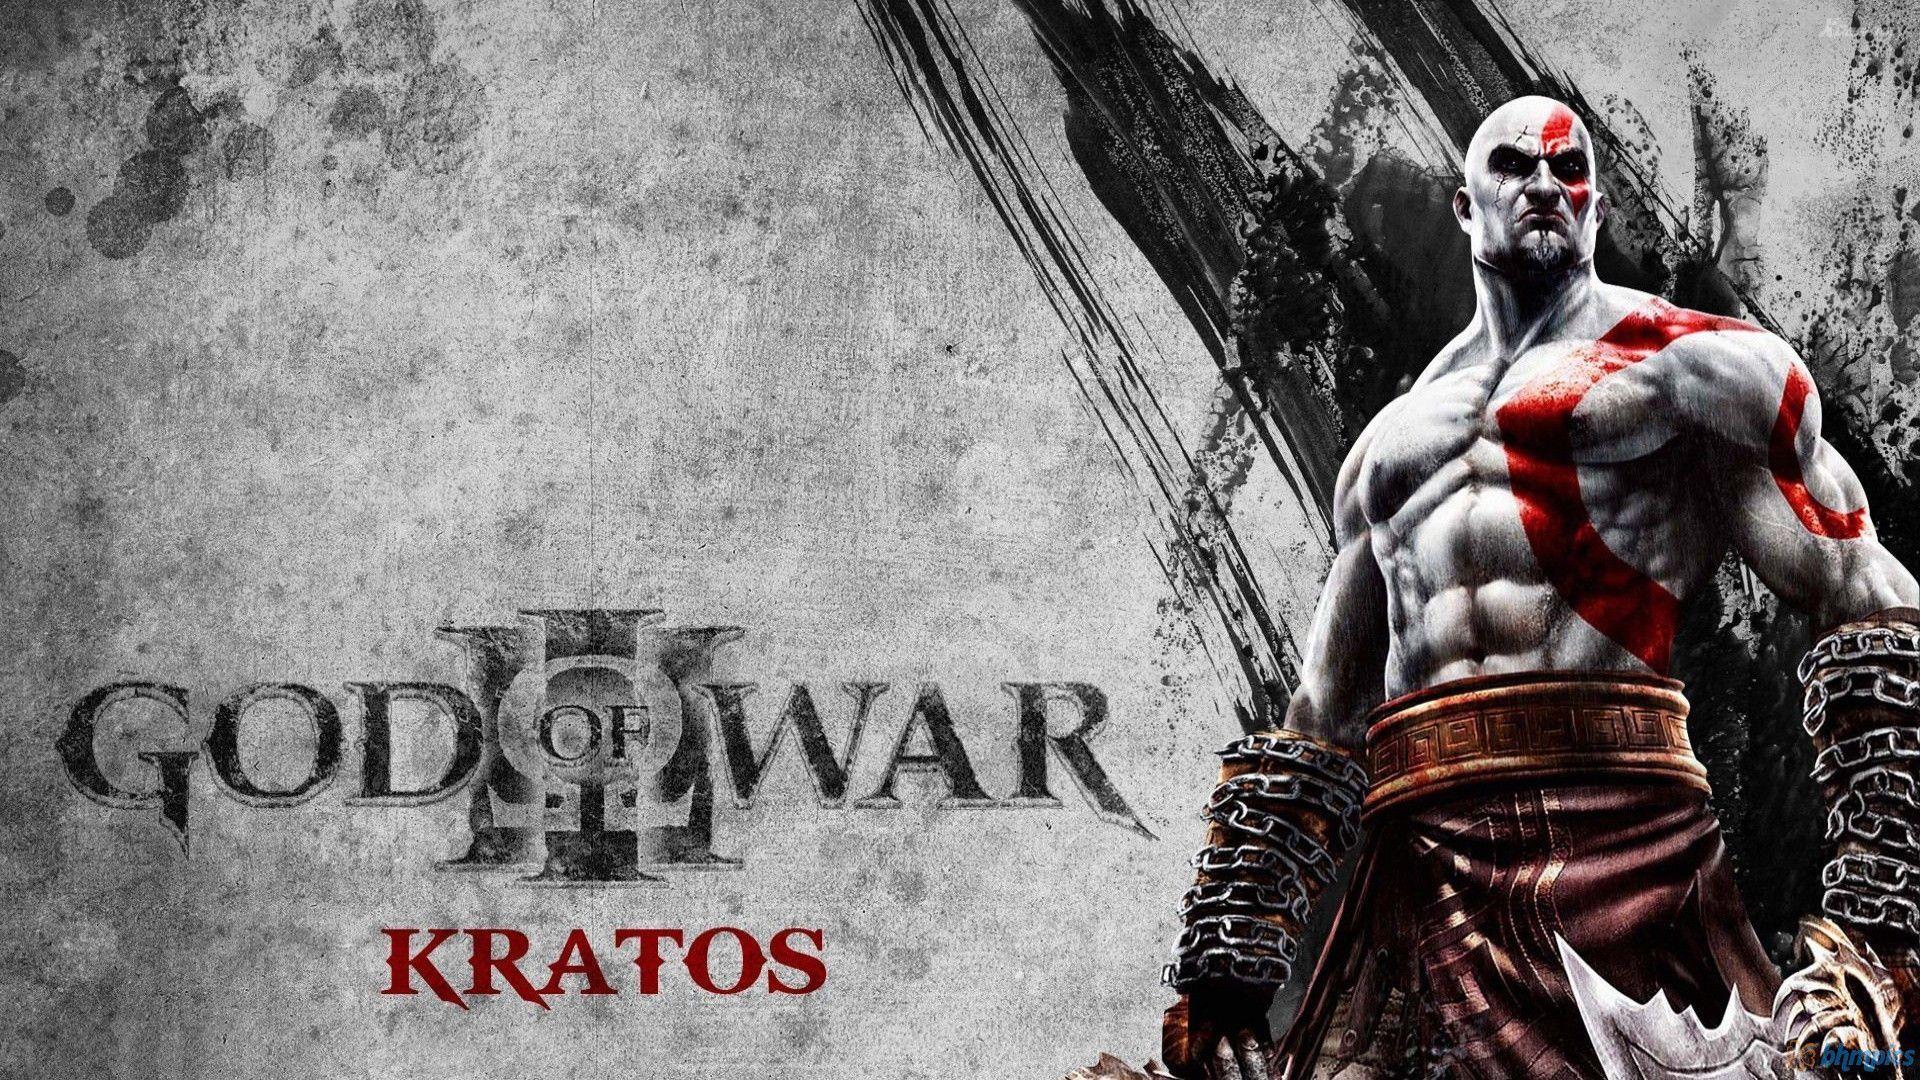 gow 3 kratos download